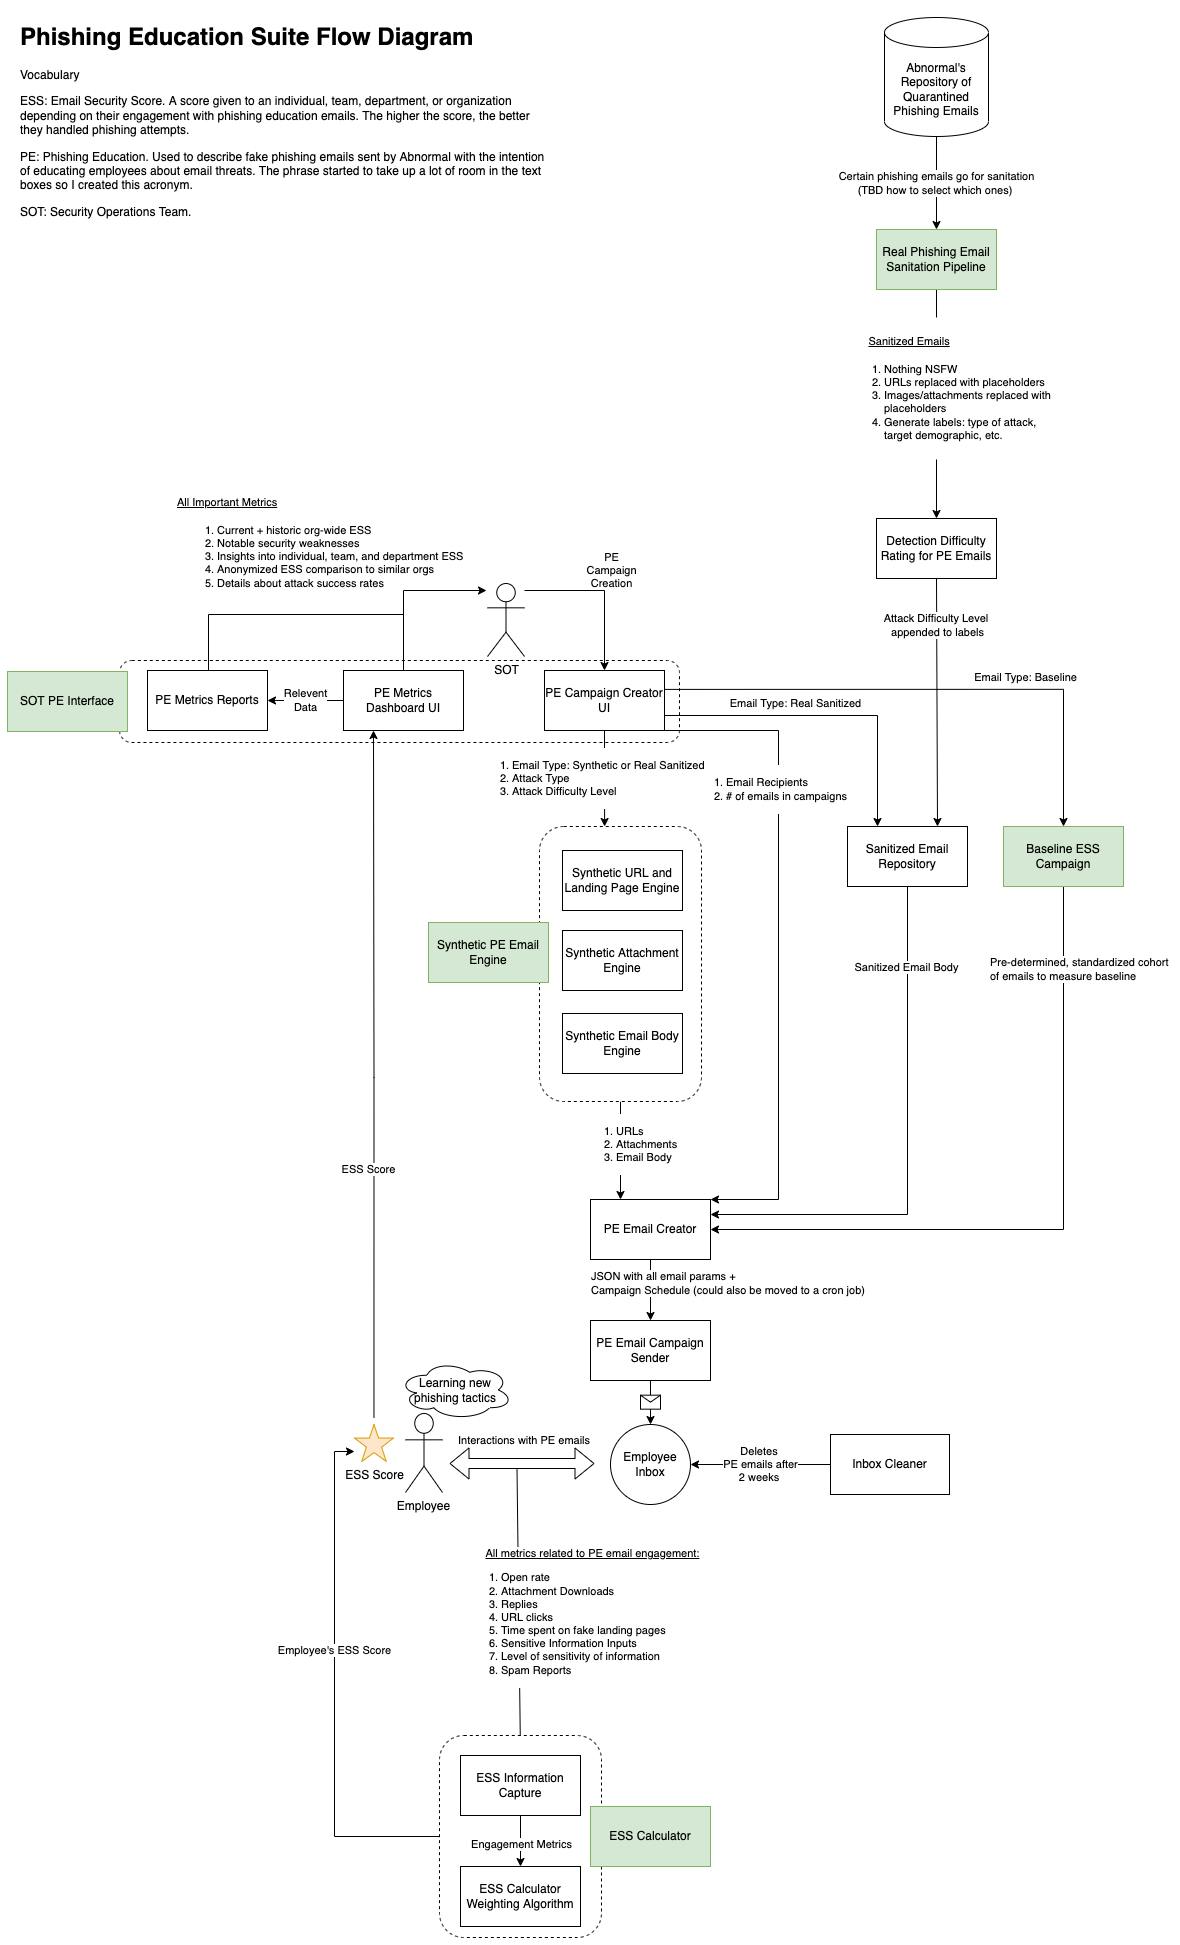 Phishing Education Suite Flow Diagram.drawio (1).png